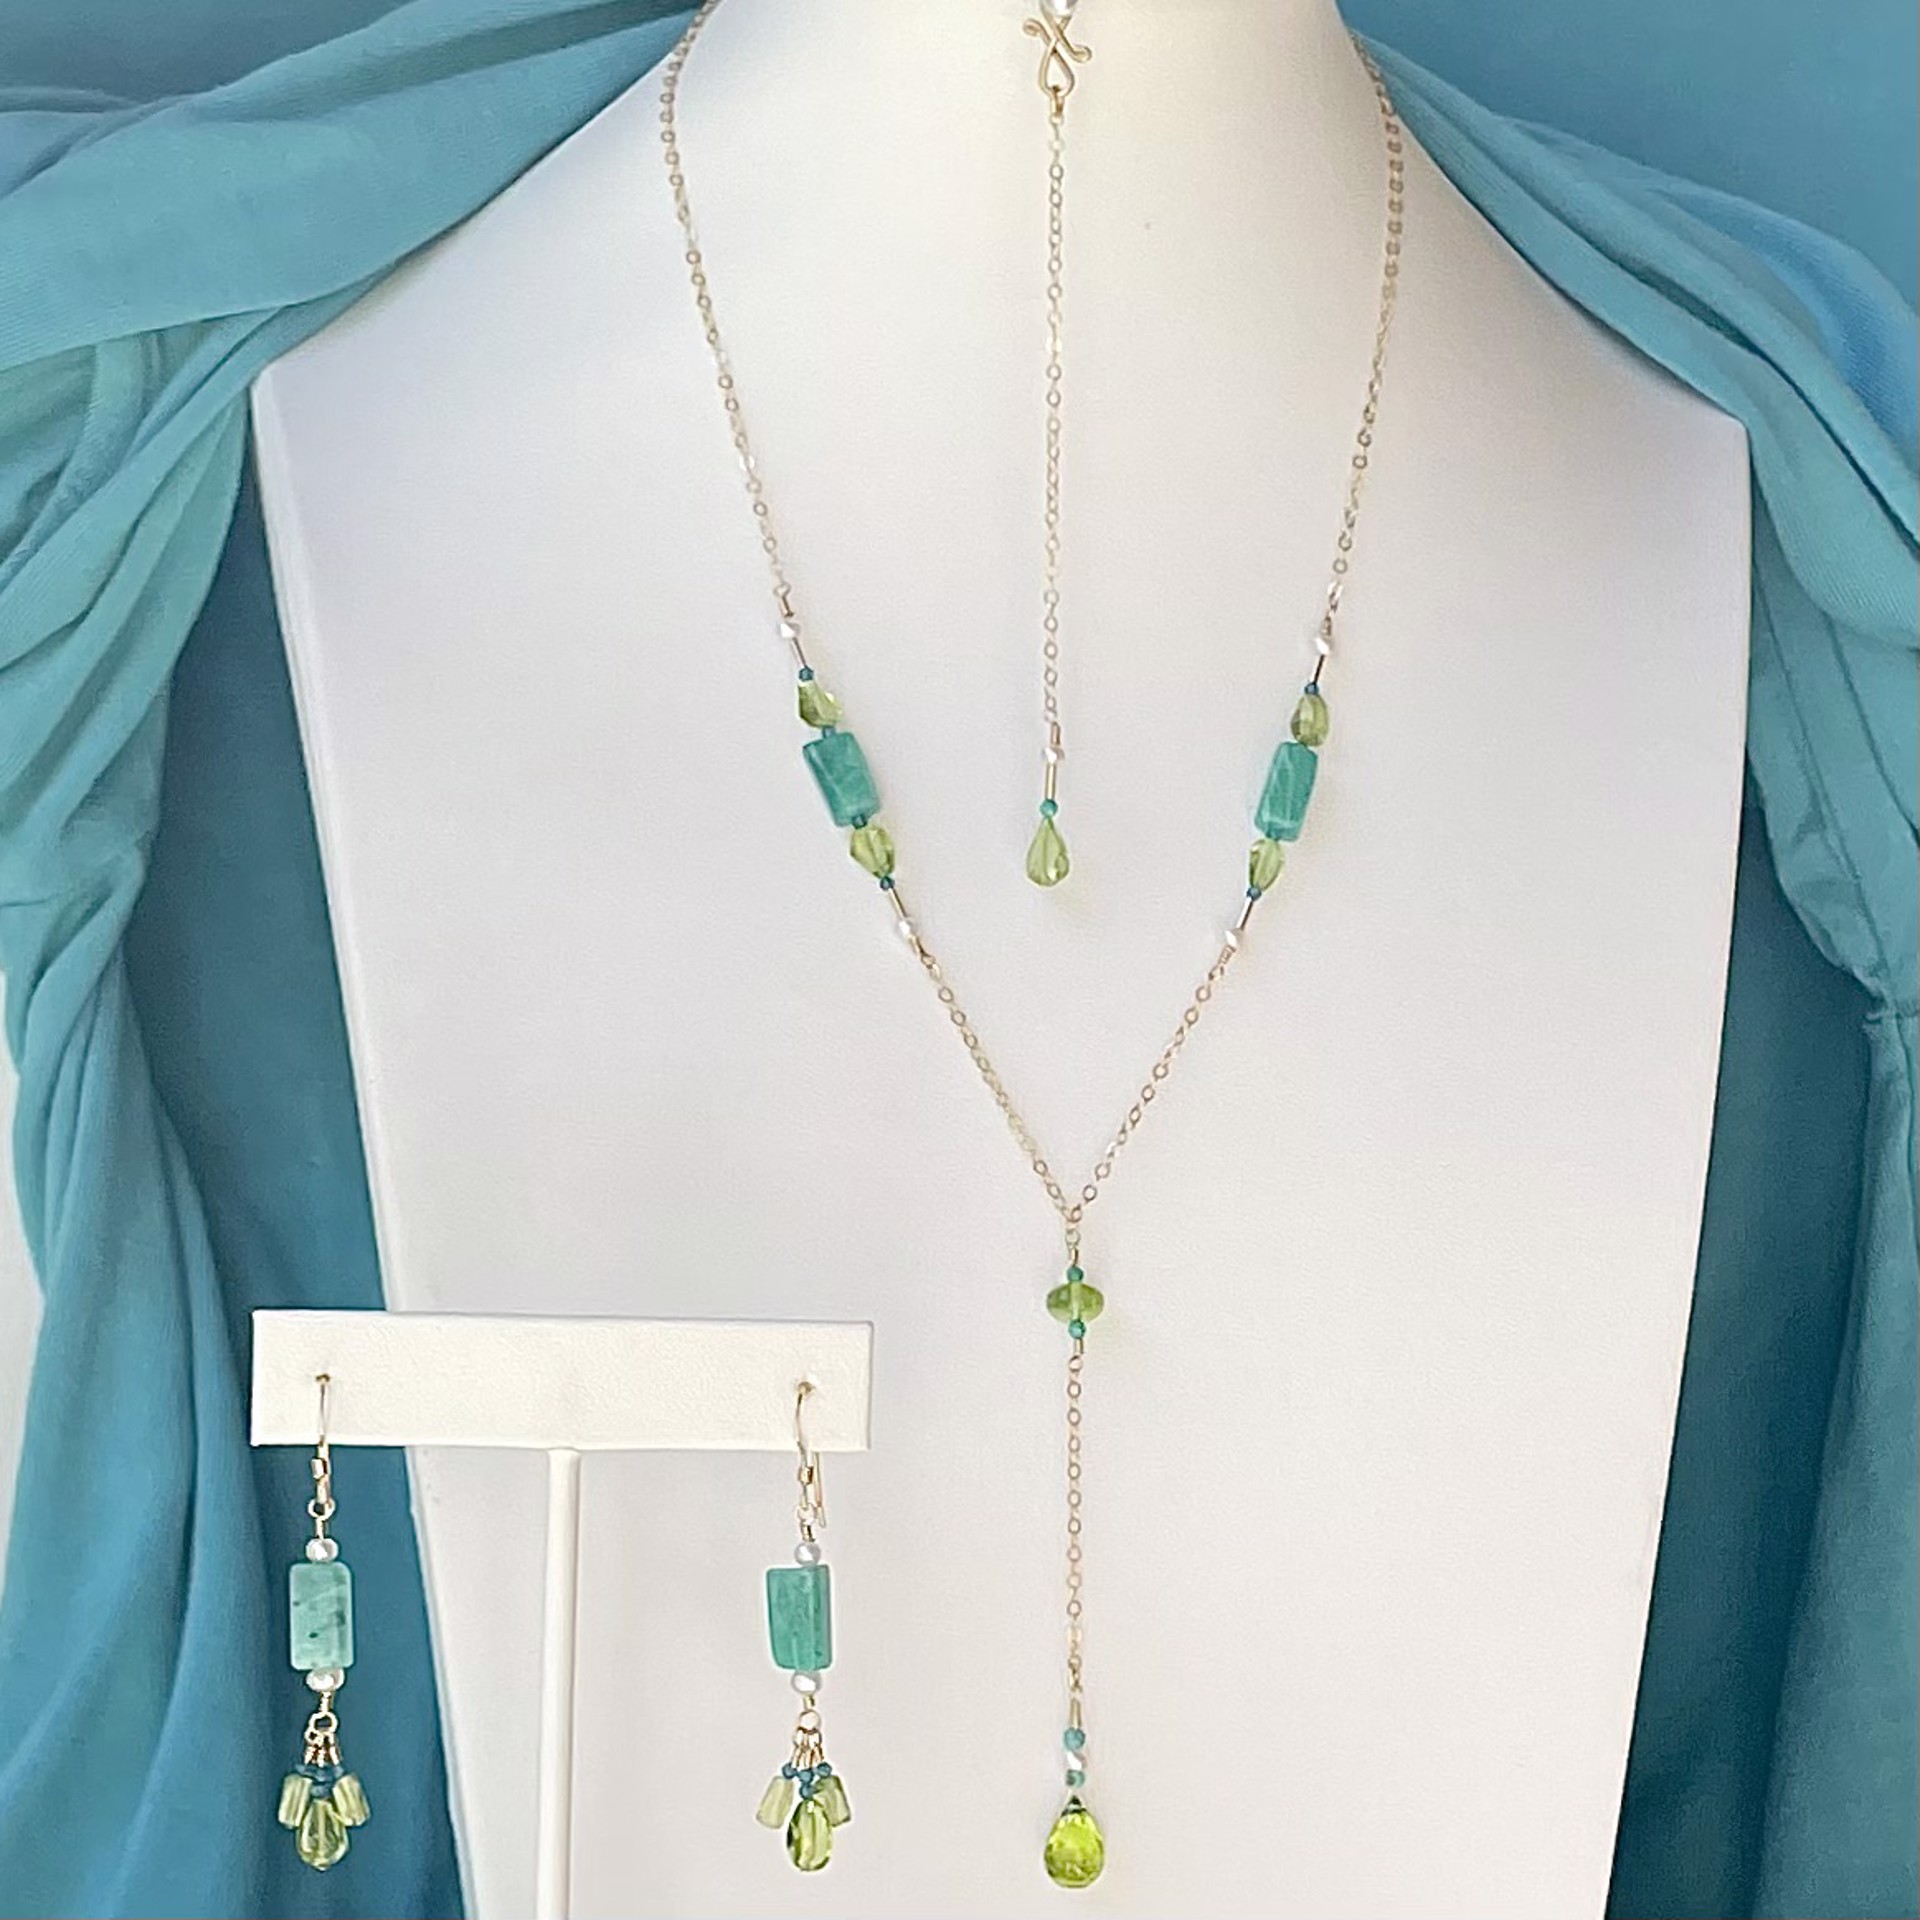 Peridot, Amazonite, and Freshwater Pearls 14k Gold Earrings by Lisa Kelley